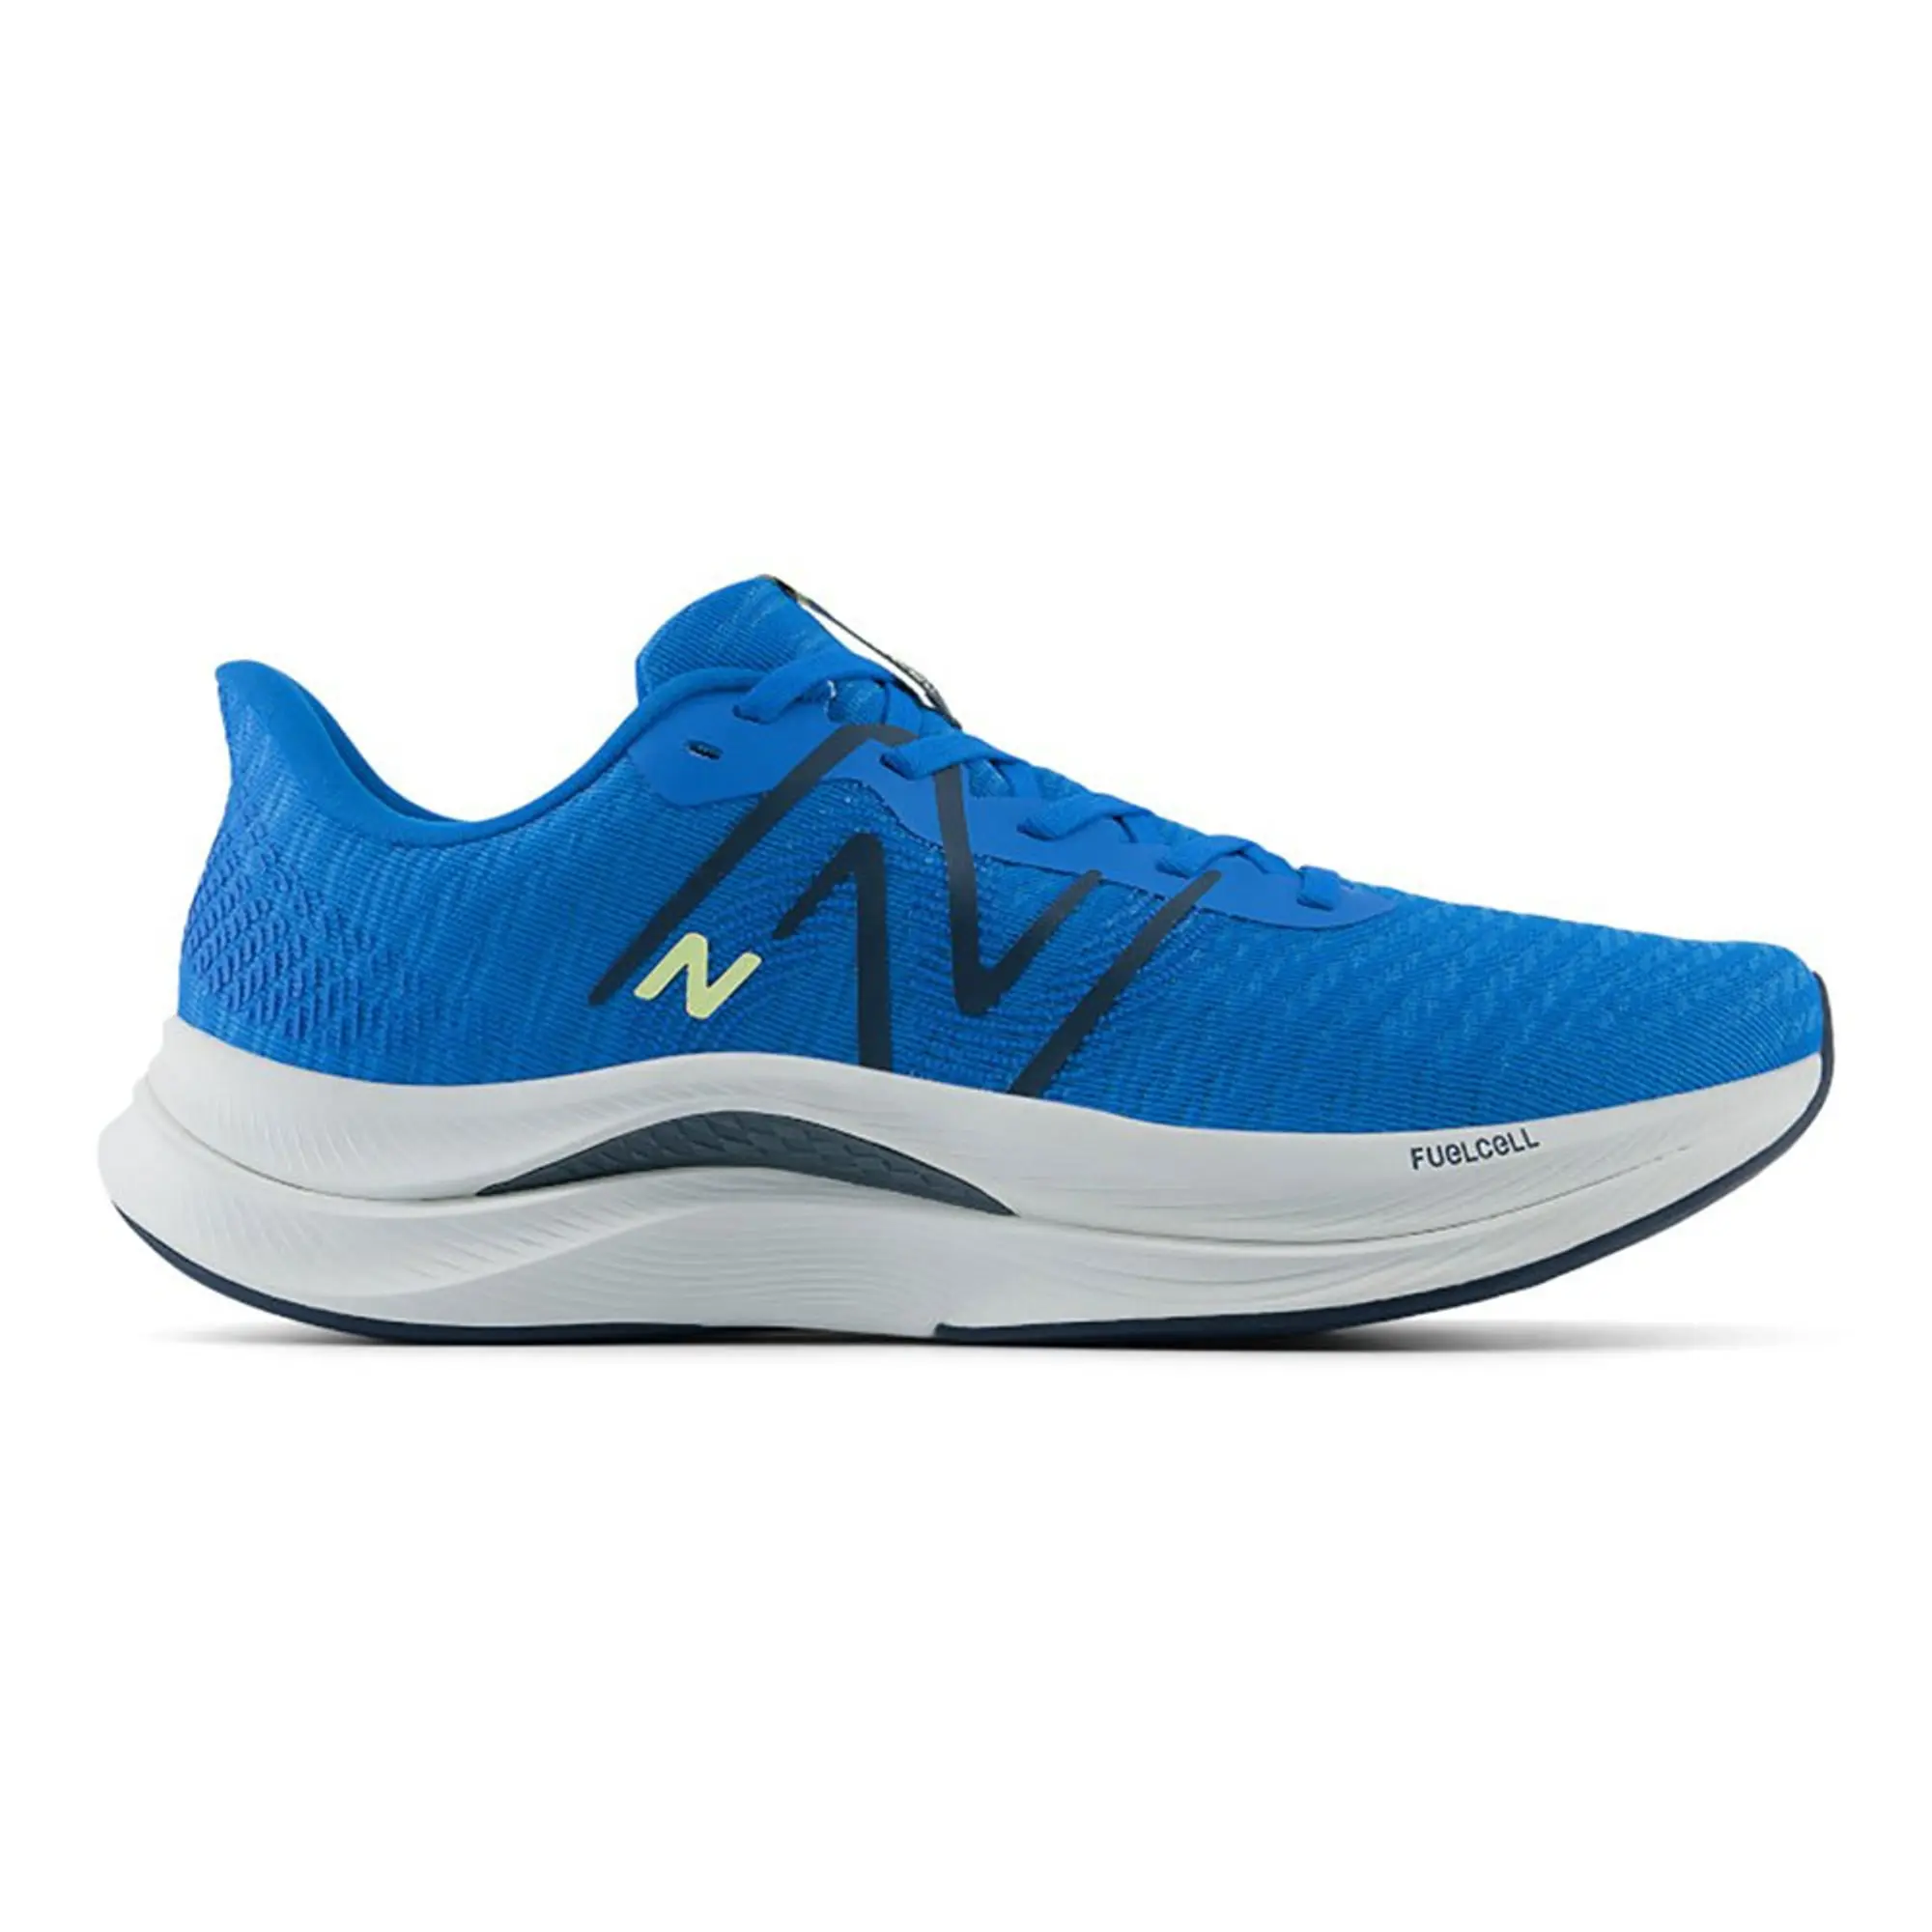 New Balance Fuelcell Propel V4 Running Shoes  EU 47 1/2 Man -